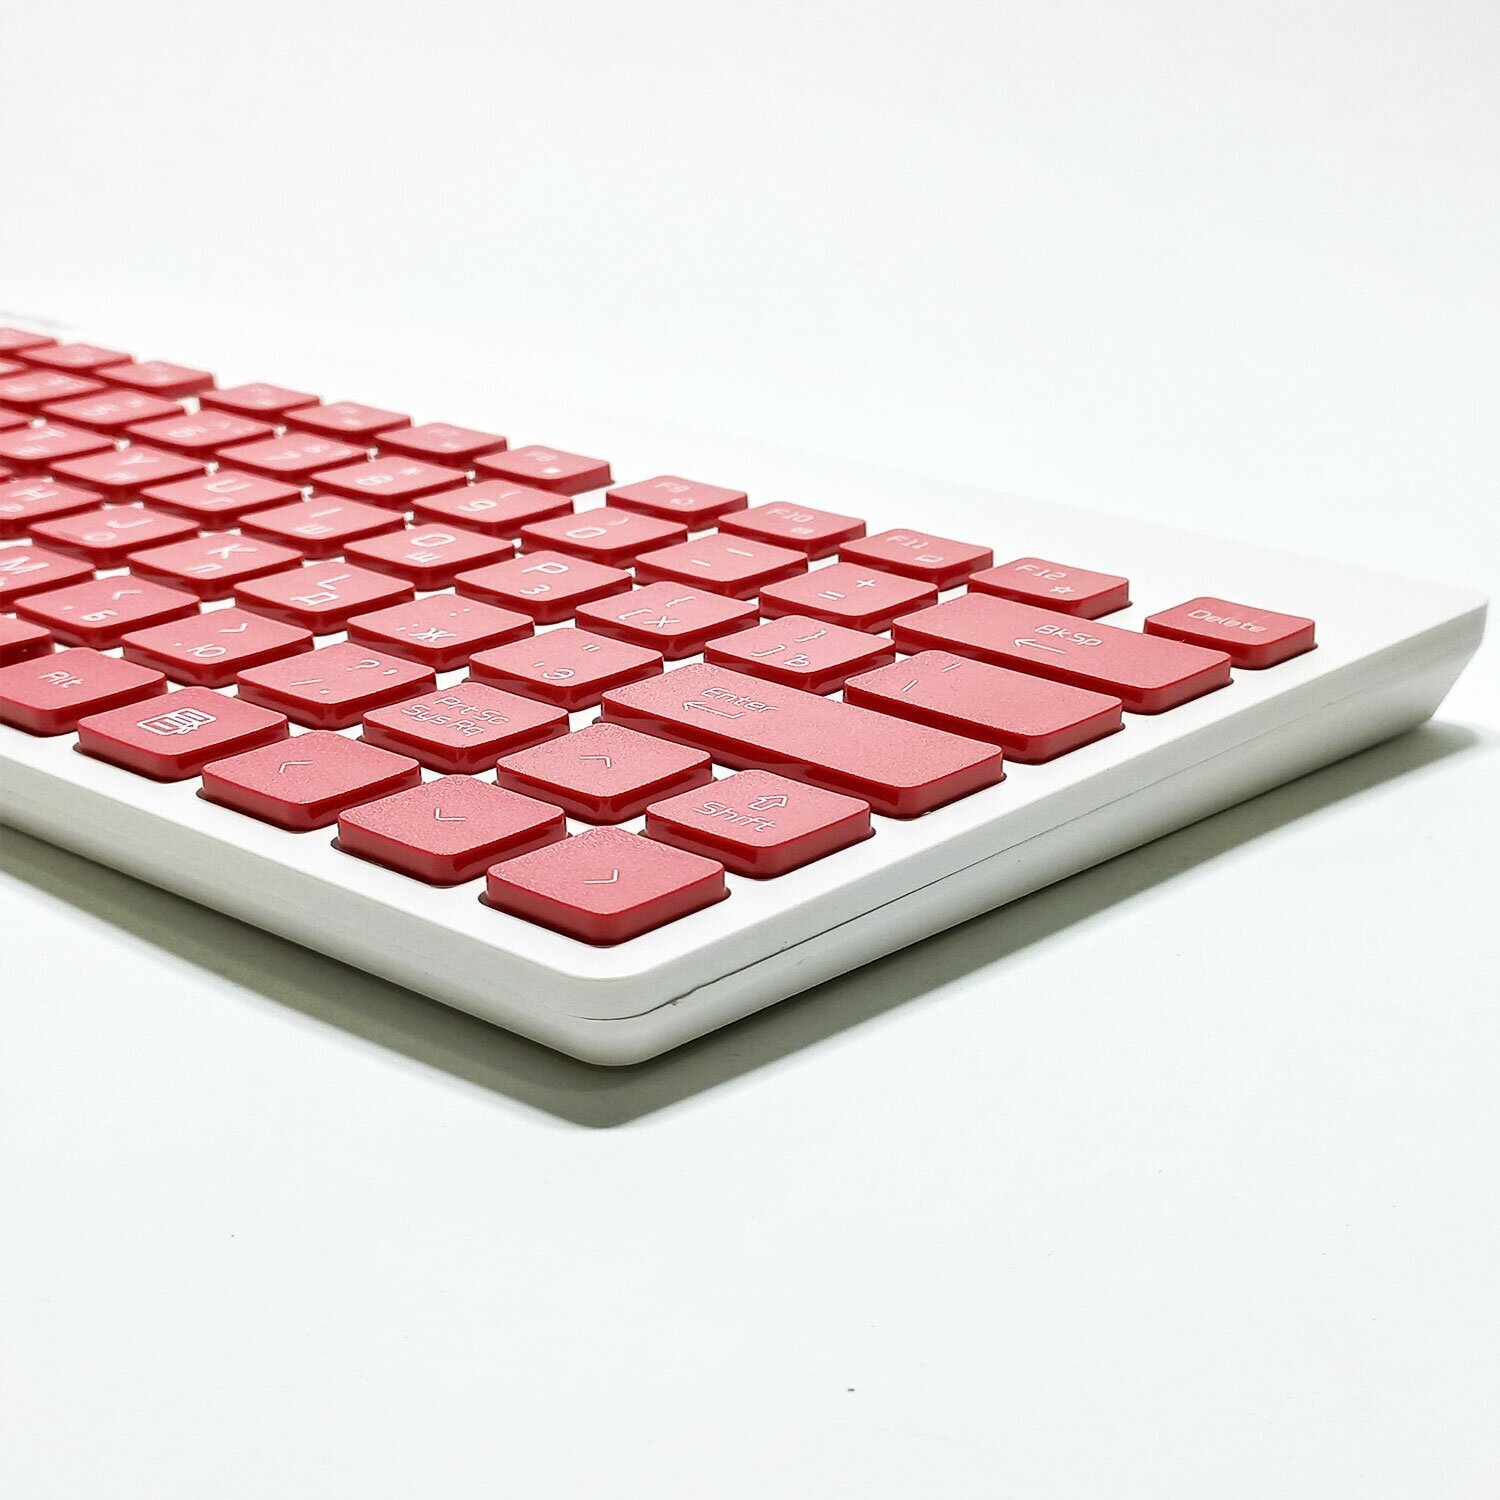 Комплект клавиатура + мышь SmartBuy SBC-220349AG-RW White USB